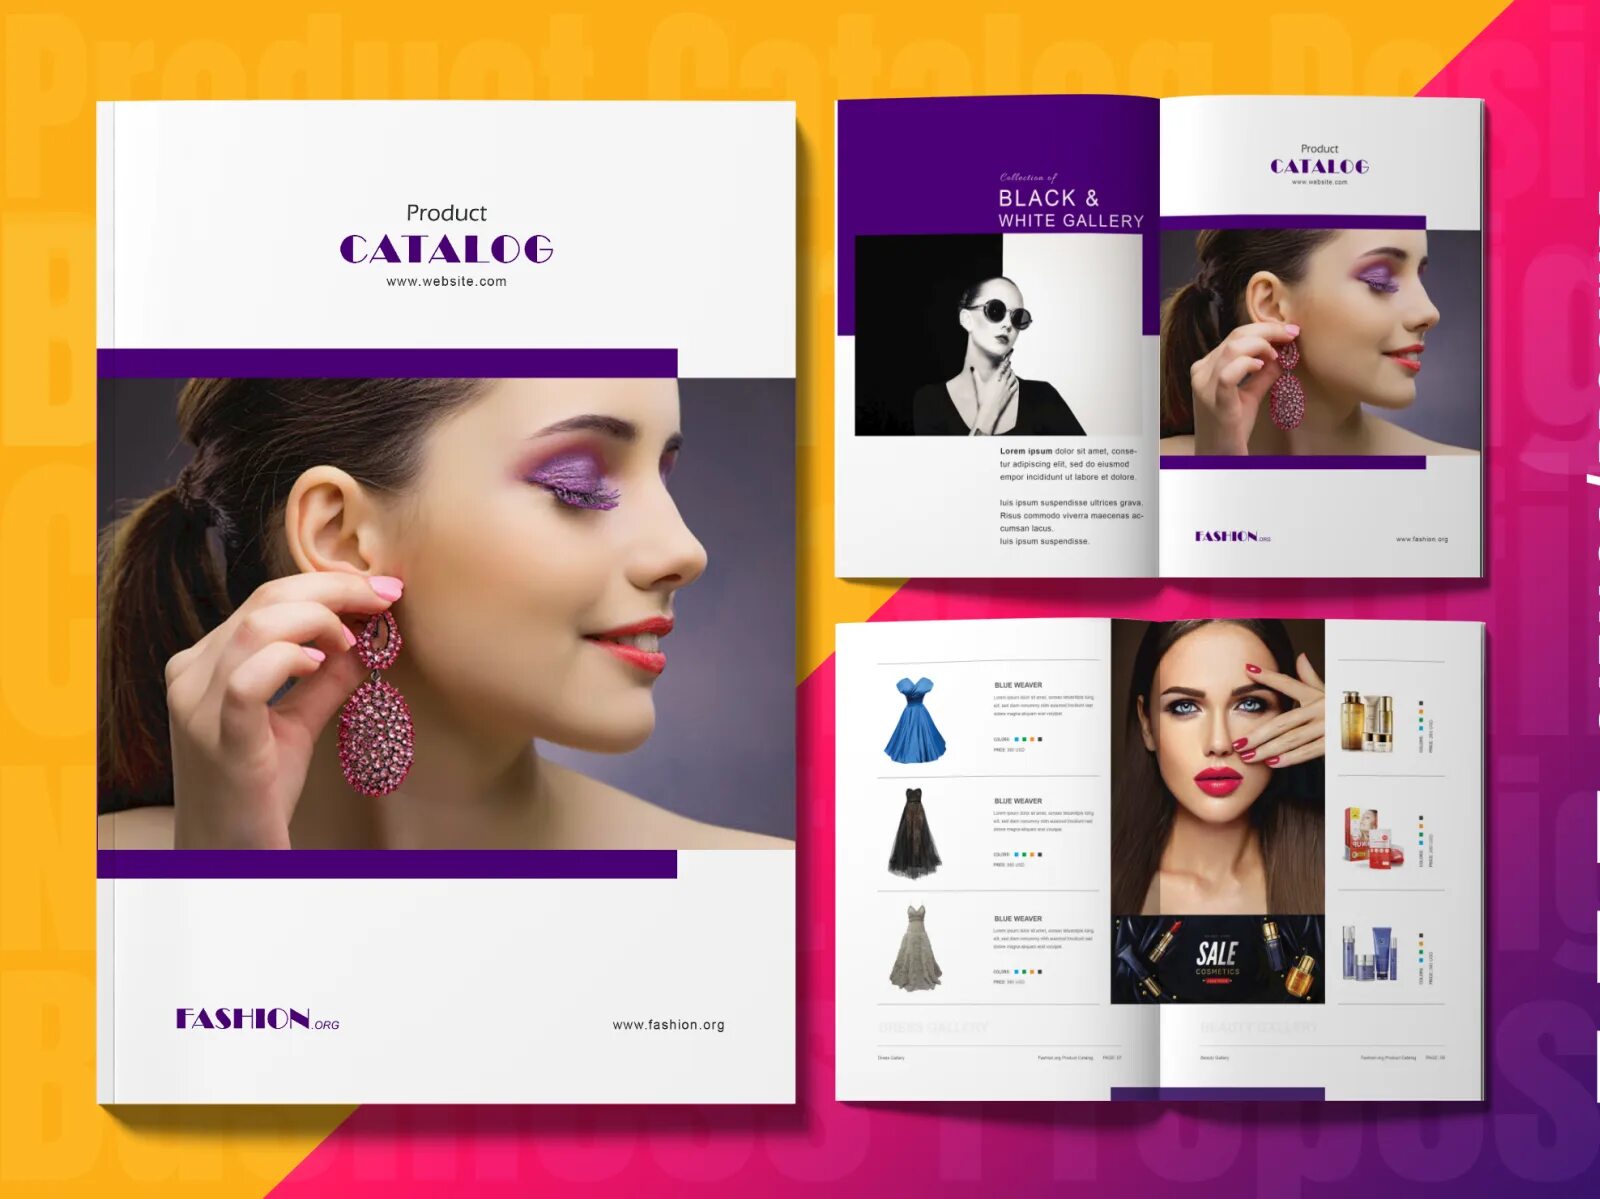 Order catalogs. Каталог дизайн. Product catalog Design. Стильная фэшн брошюра. Каталог косметики дизайн.